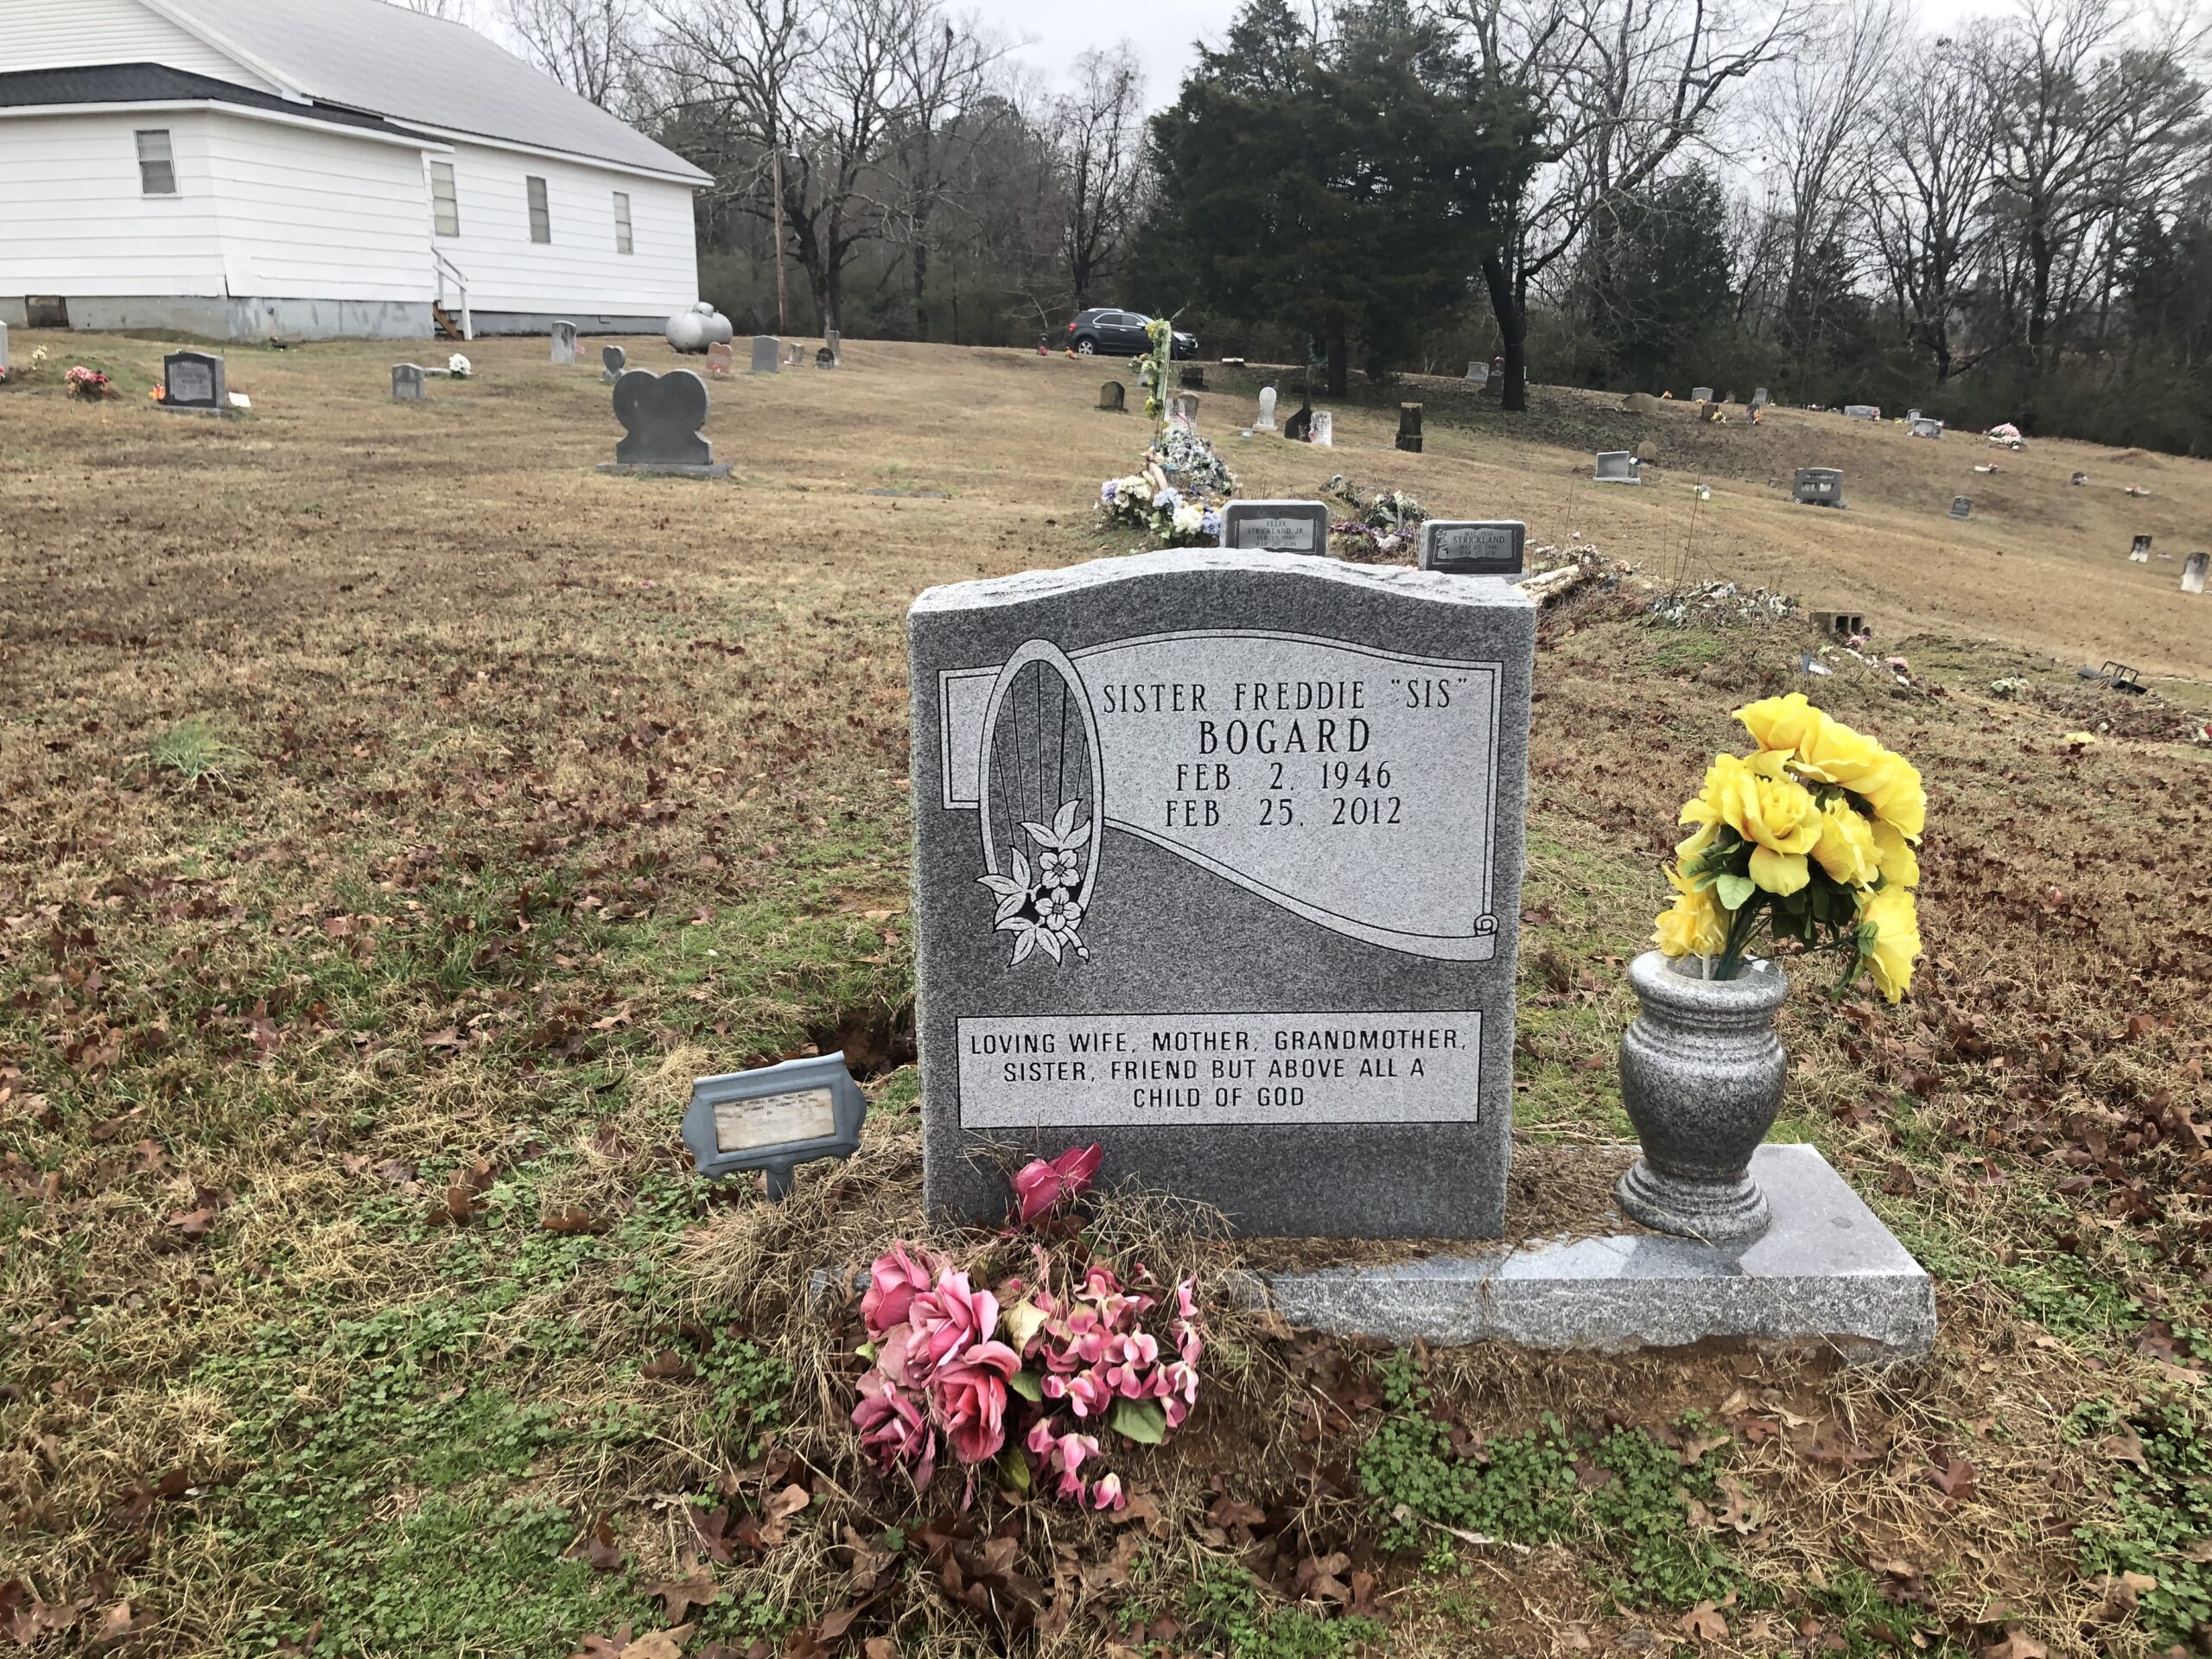 The grave Sister Freddie "Sis" Bogard